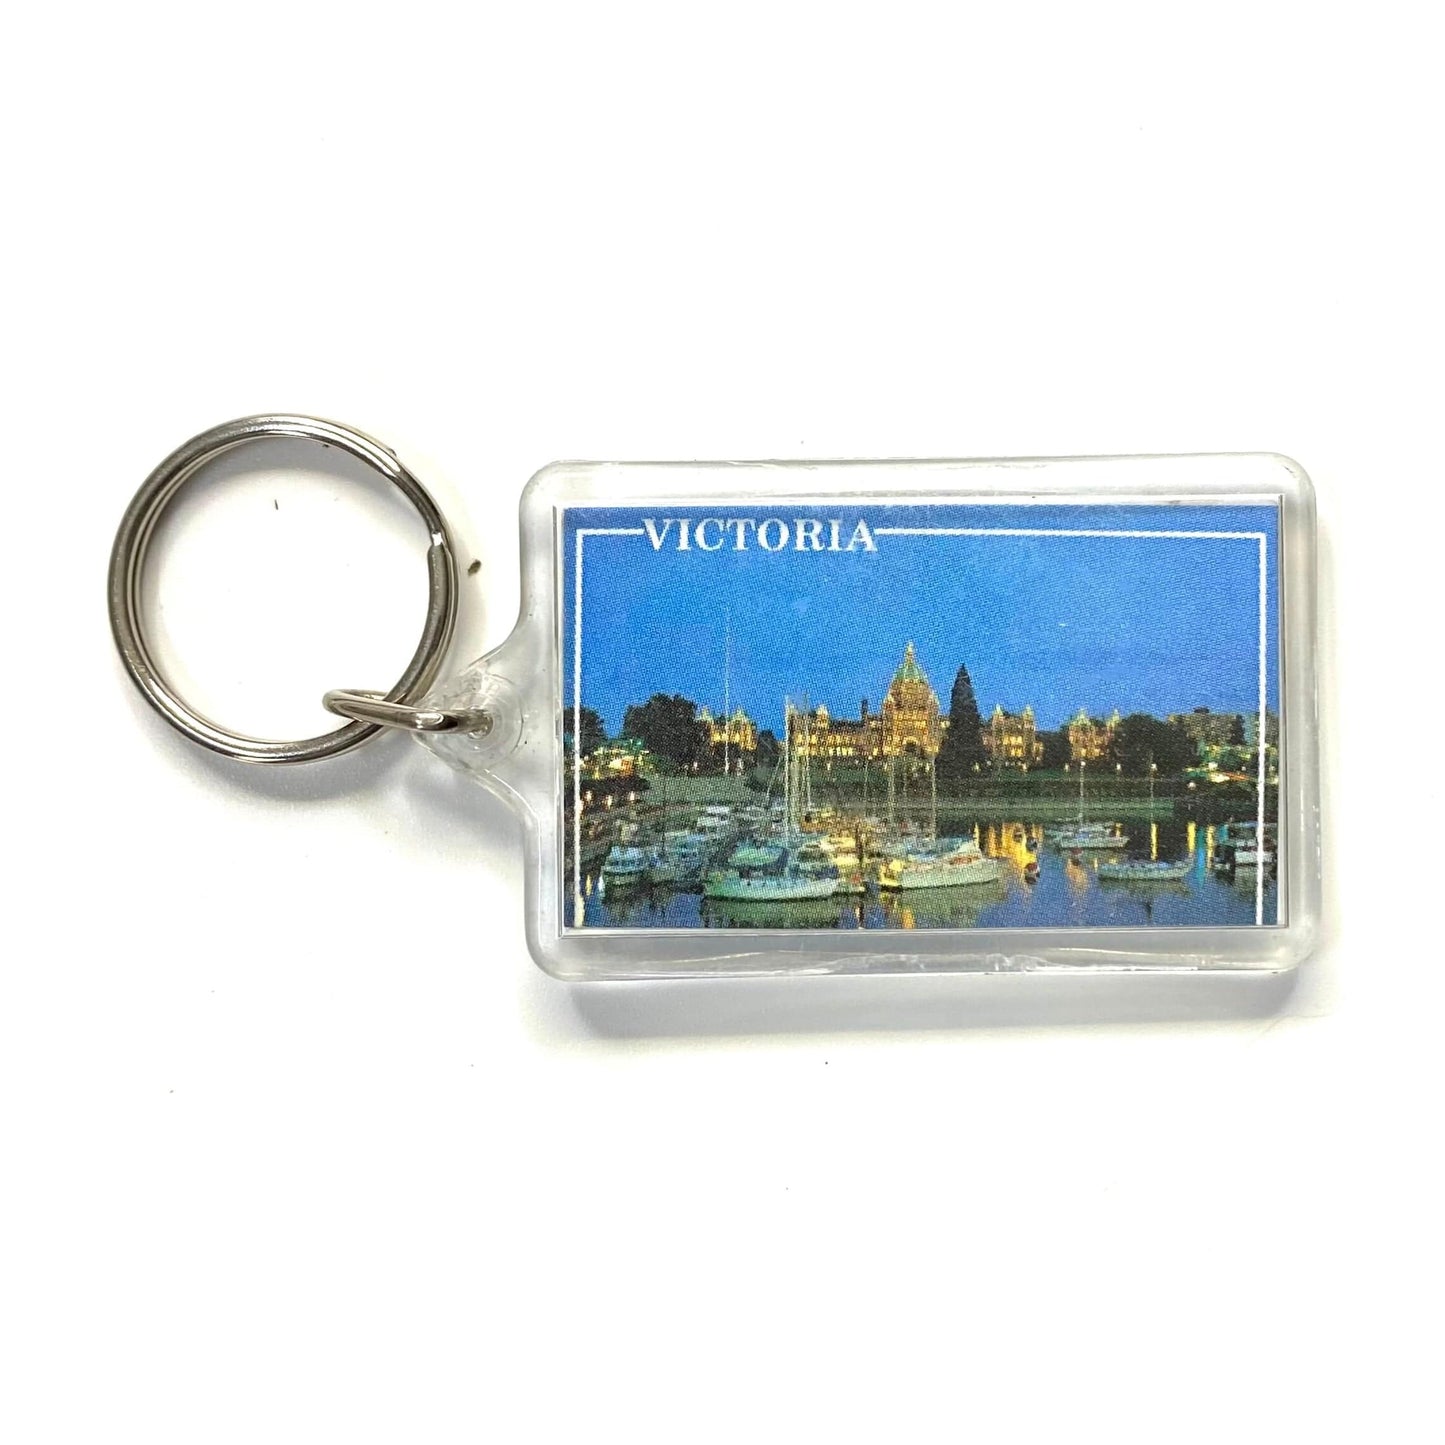 Vintage “Victoria” British Columbia Travel Souvenir Keychain Key Ring Rectangle Clear Acrylic